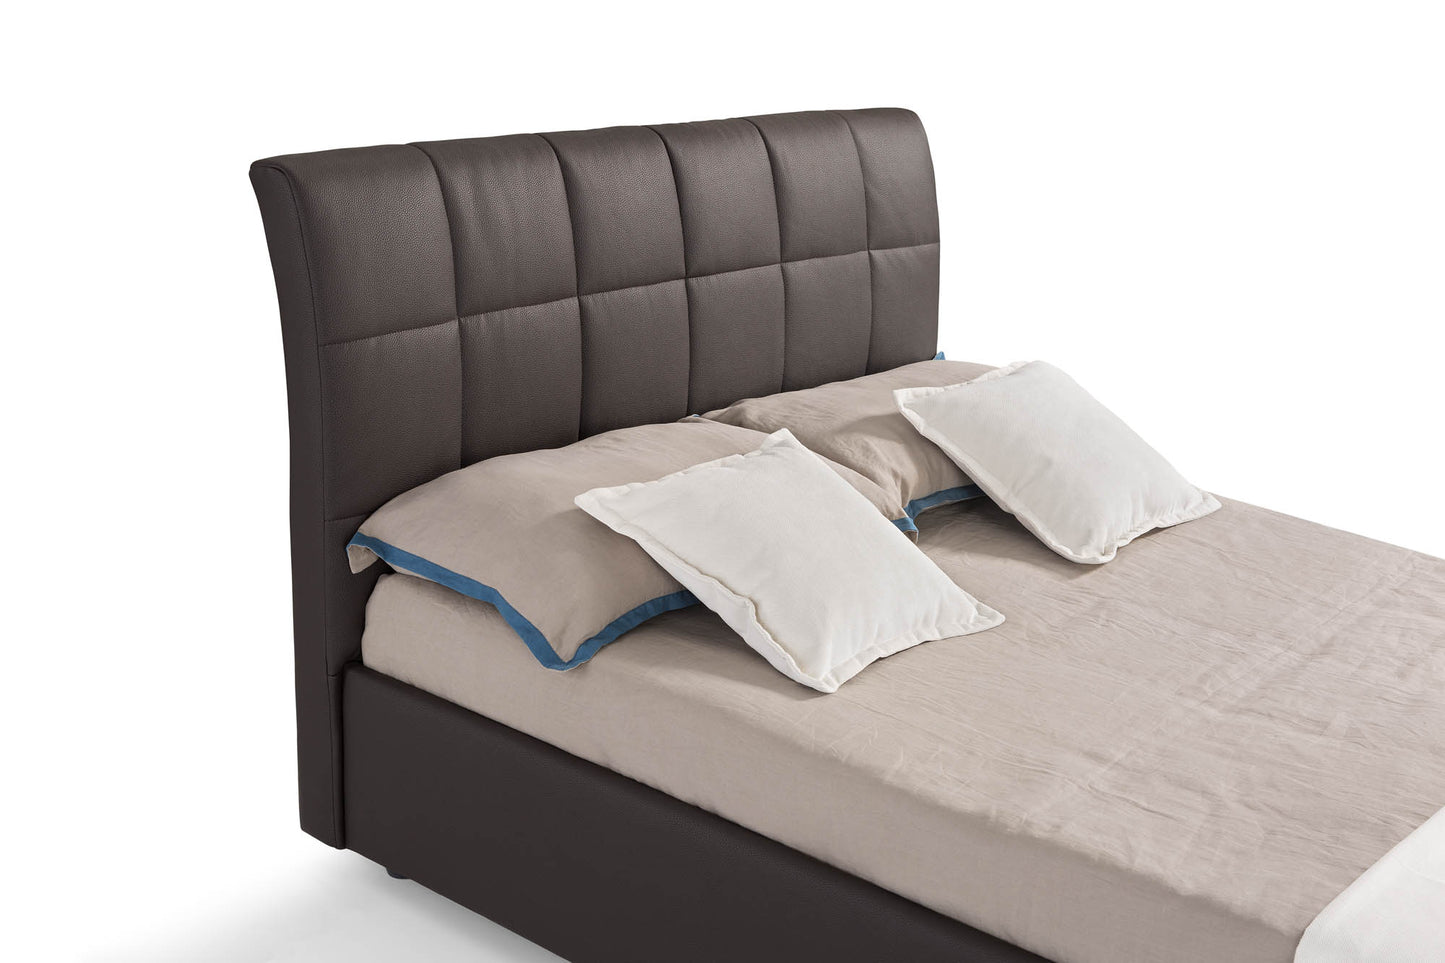 Novaluna Italy - Berlino Bed - Made in Italy